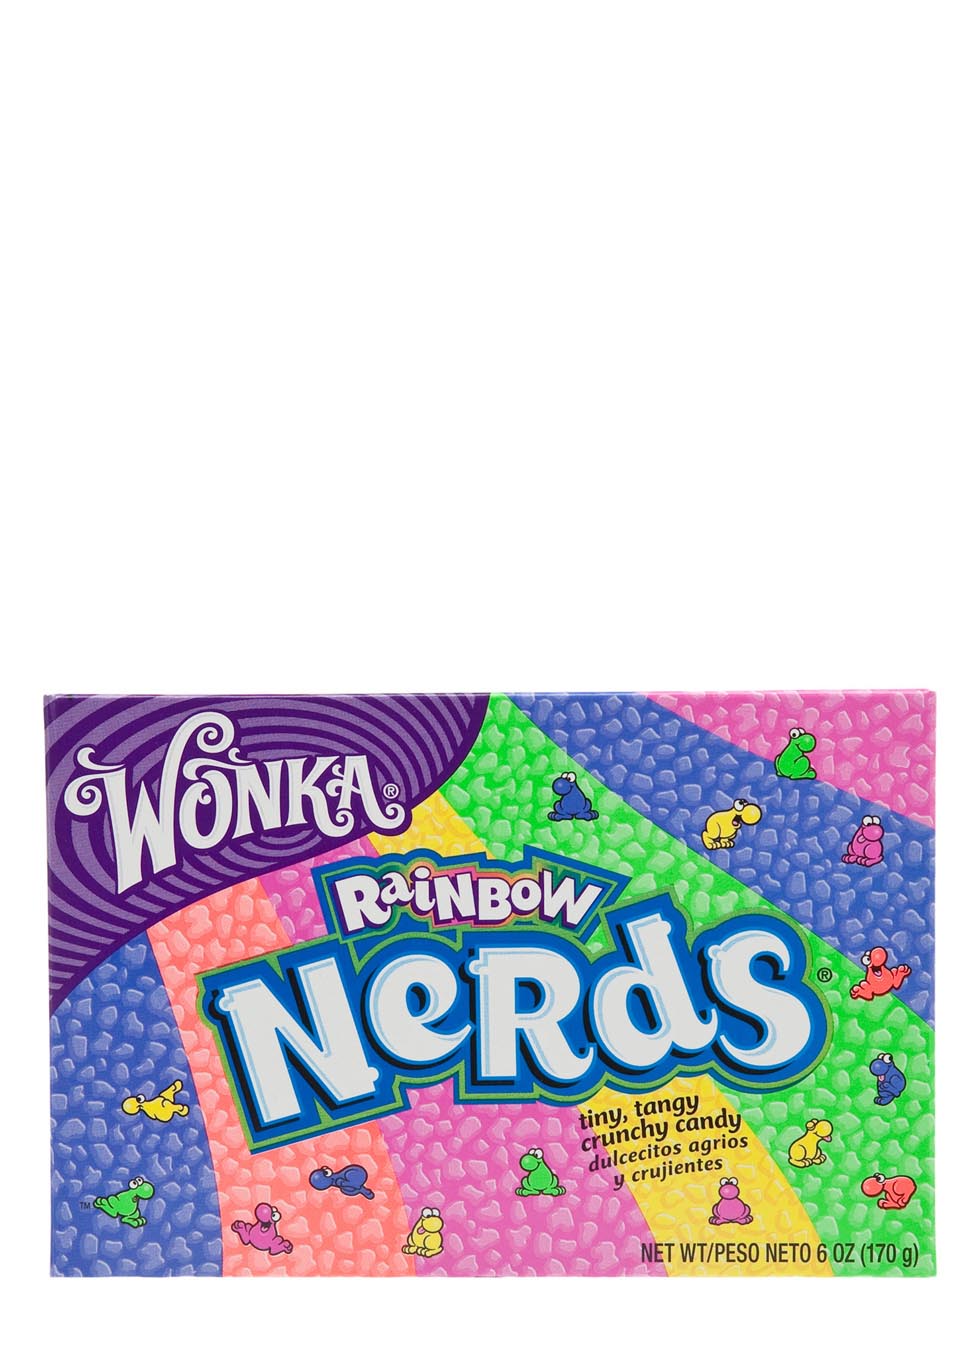 Wonka Rainbow Nerds 141g Harvey Nichols